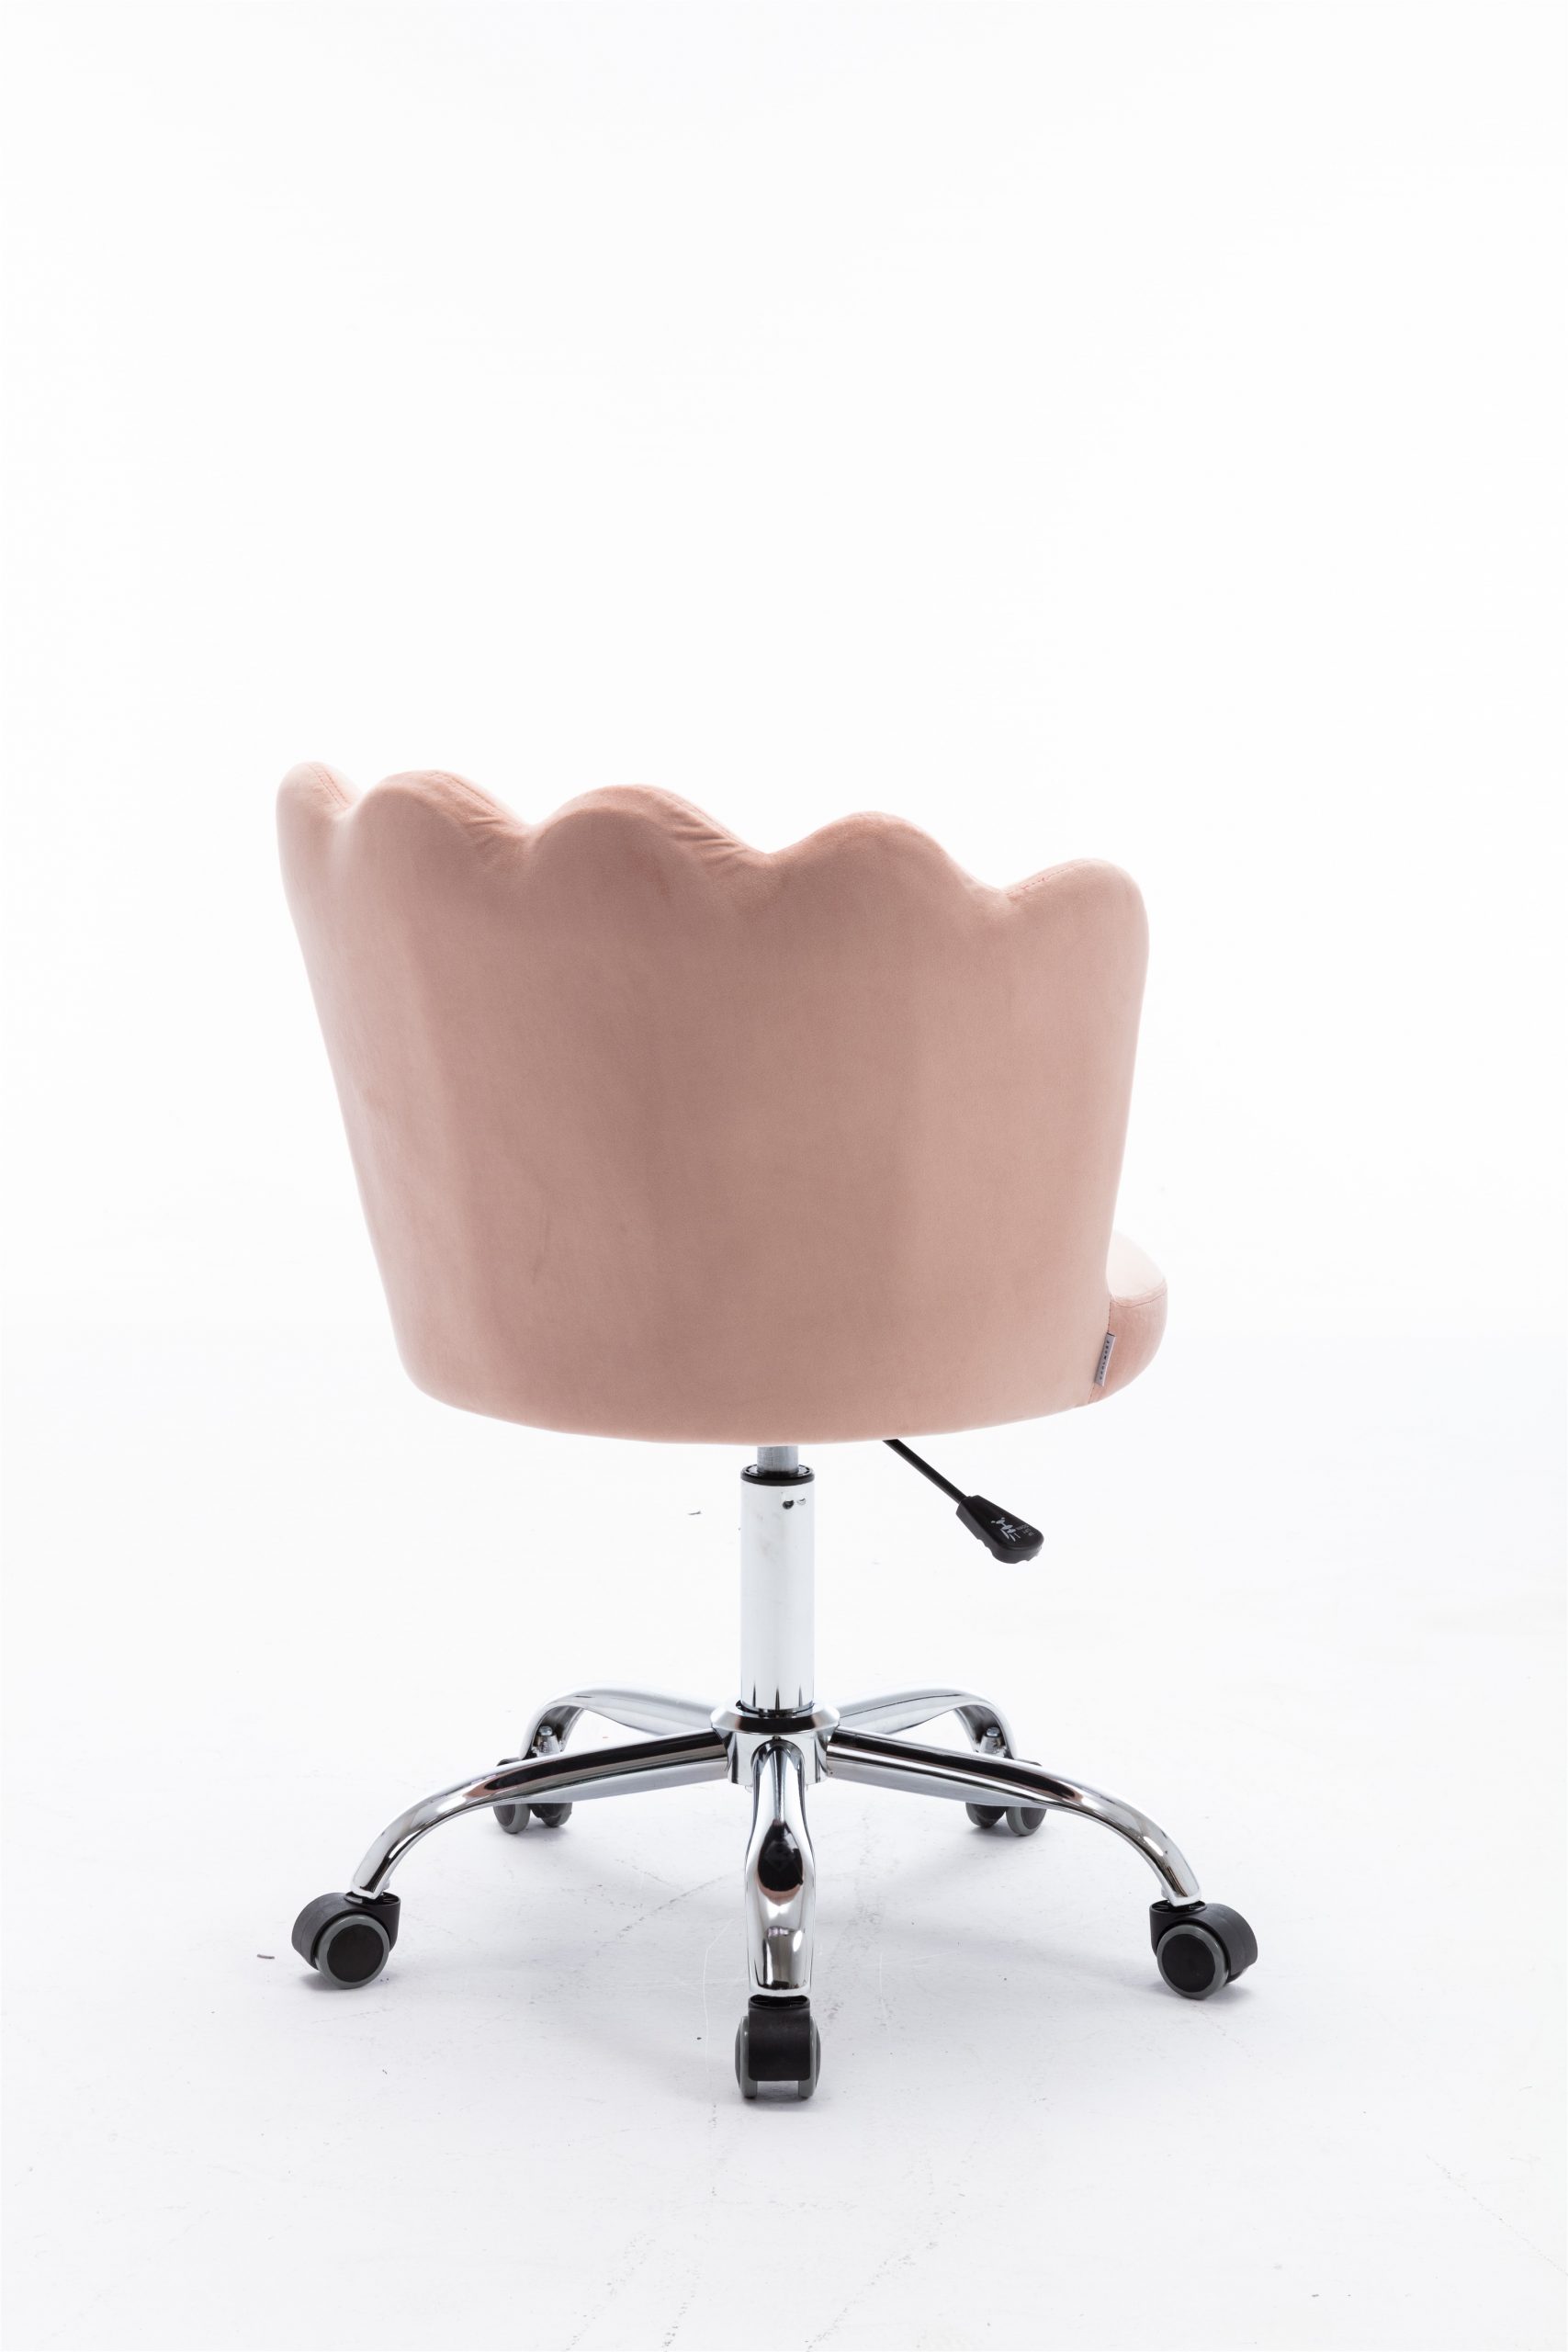 Swivel Shell Chair for Living Room - W39523203